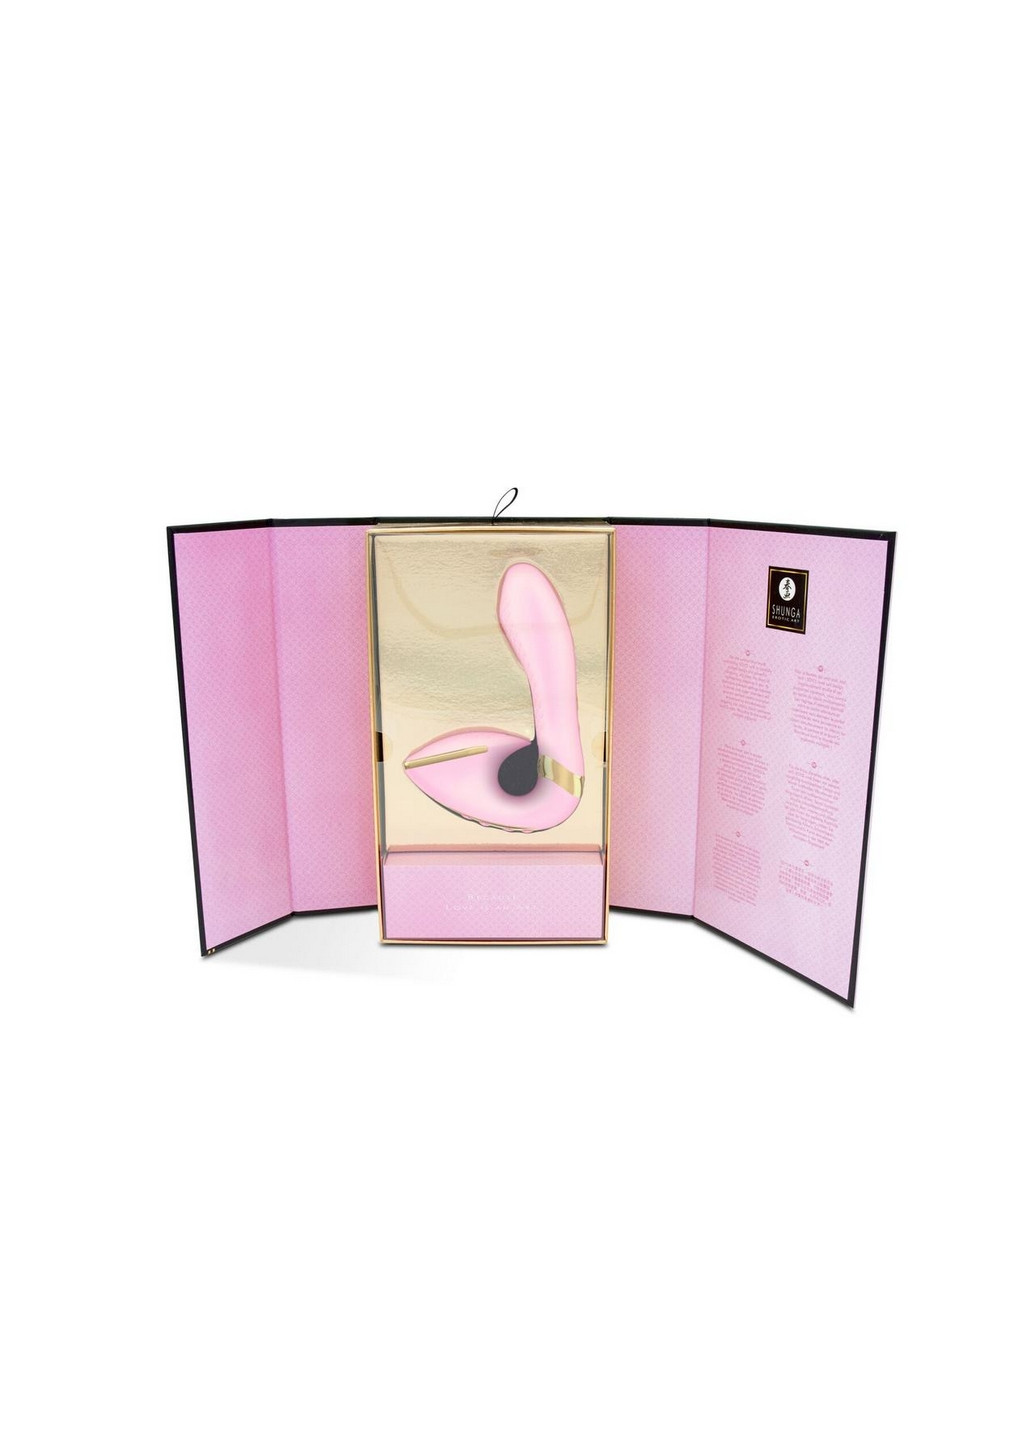 Вибратор - Soyo Intimate Massager Light Pink Shunga (260450488)